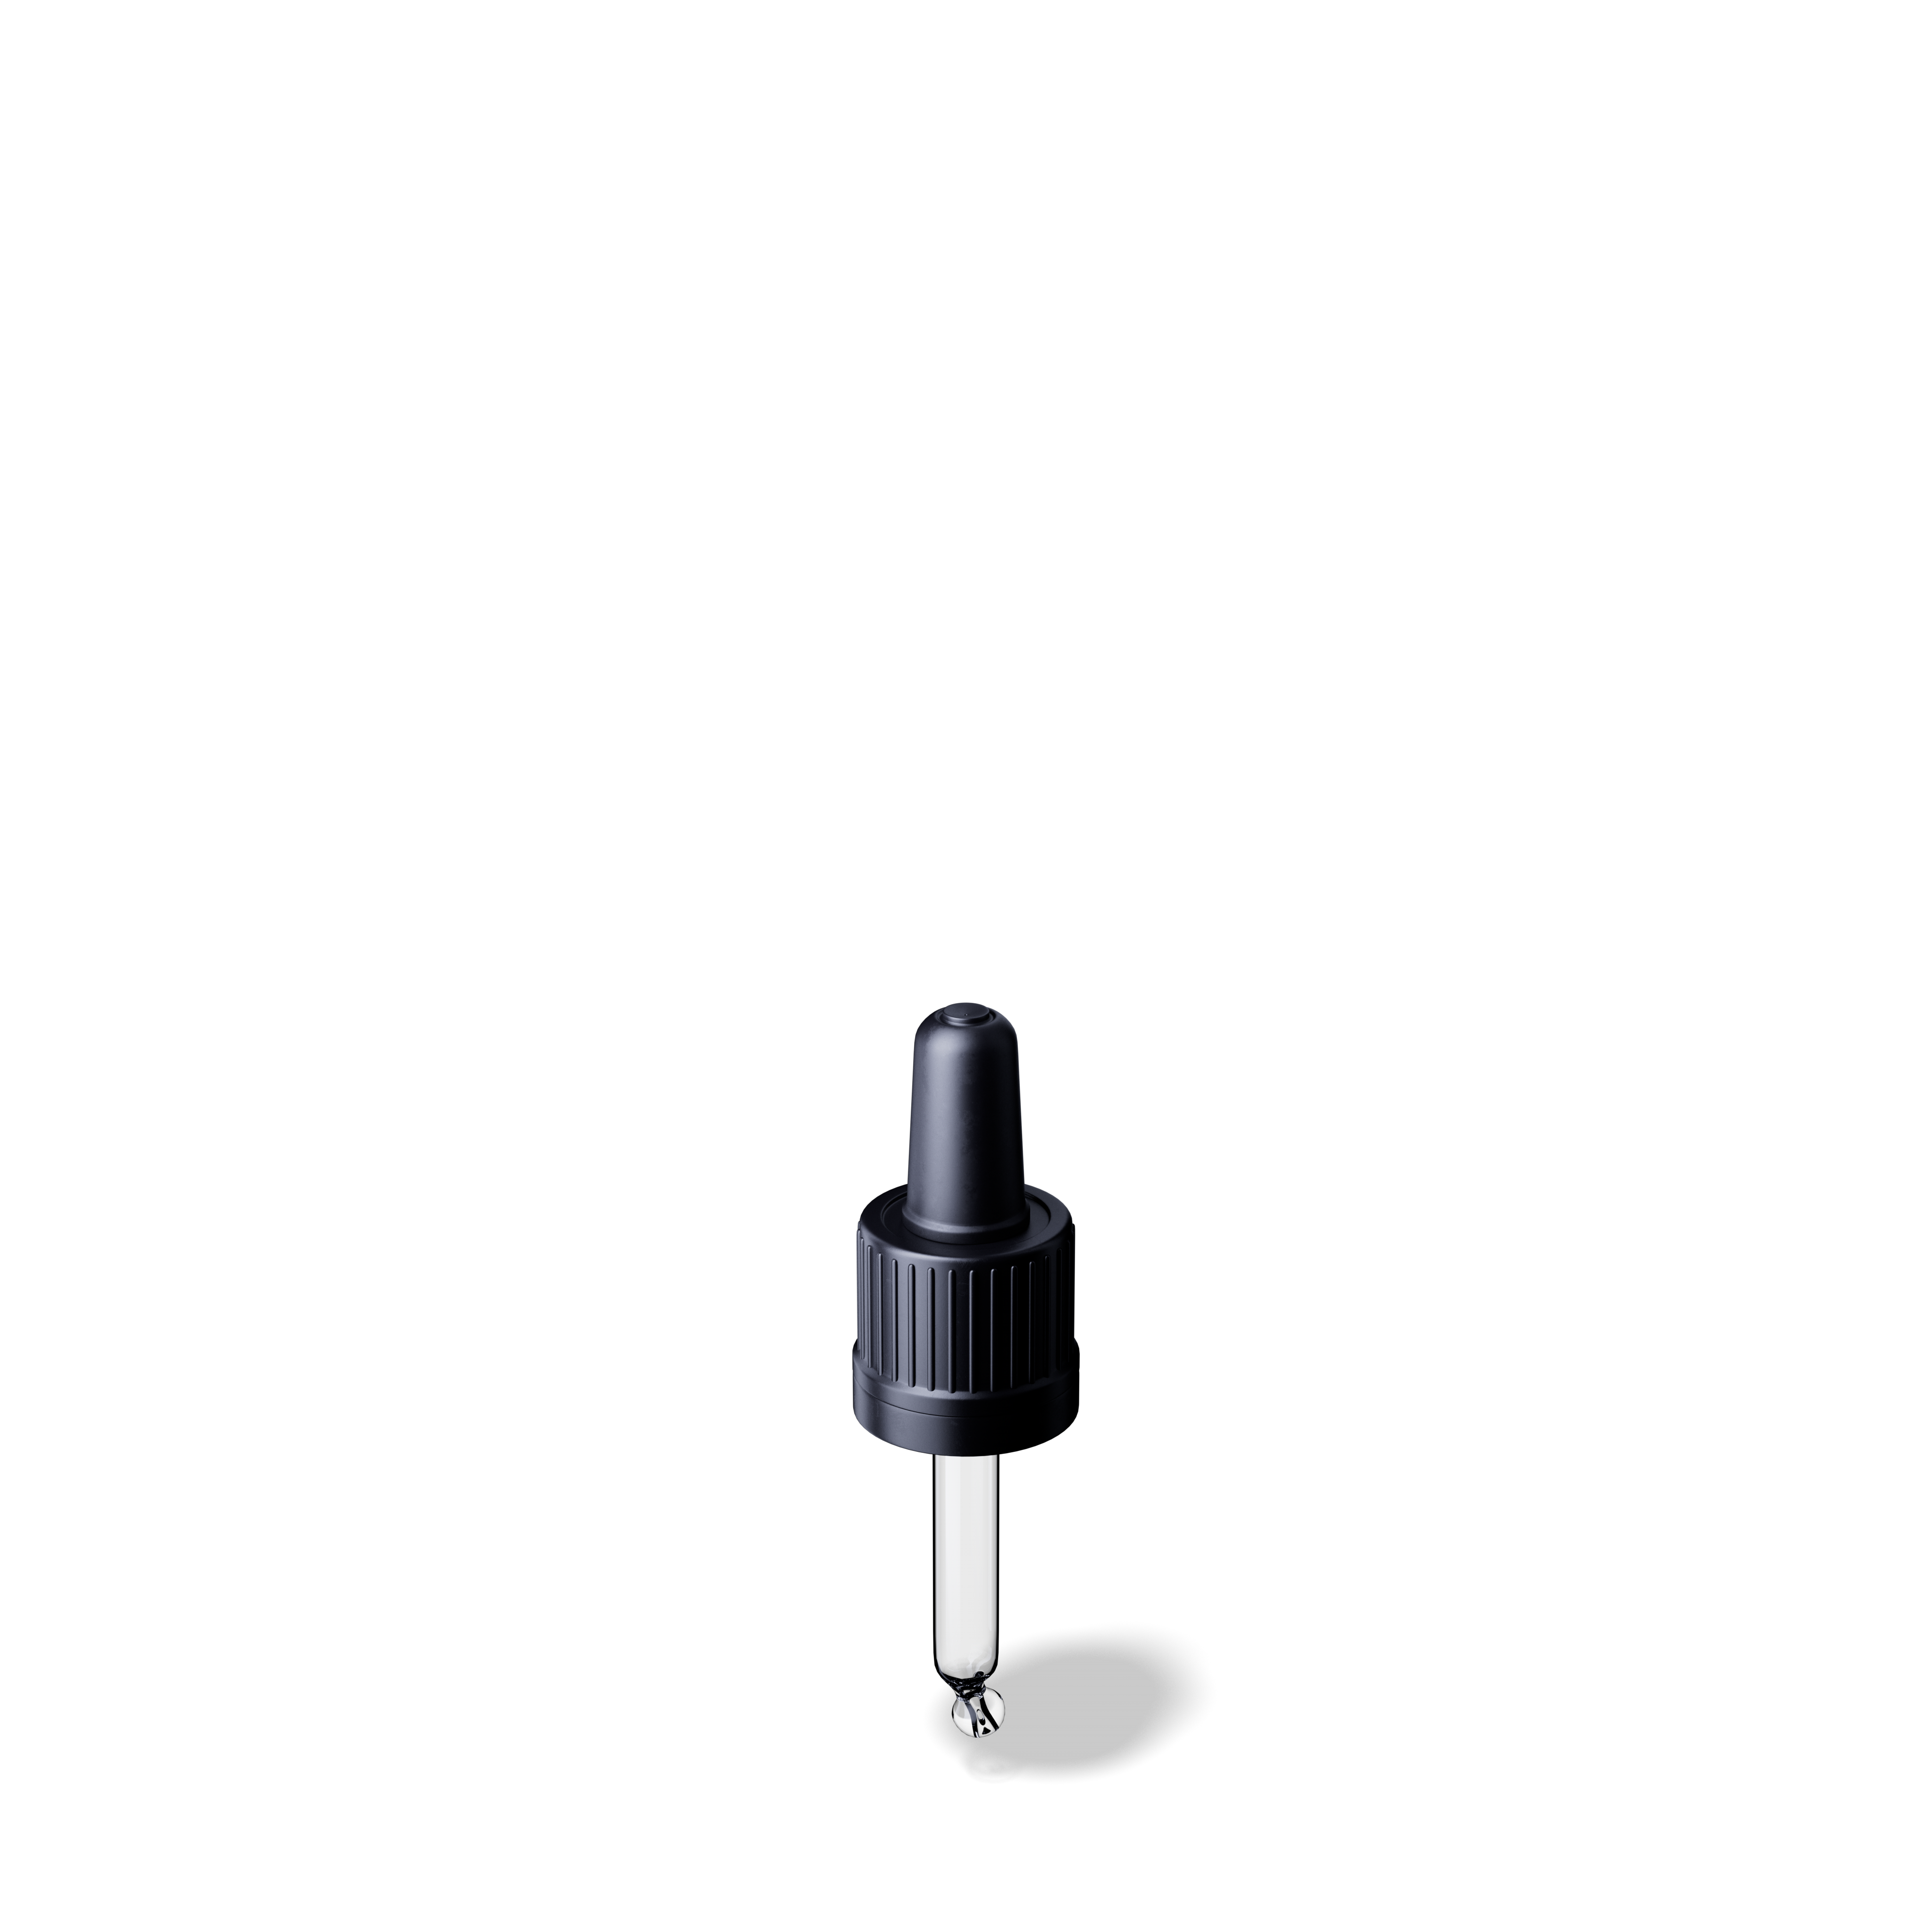 Pipette tamper evident DIN18, II, black, ribbed, bulb TPE, dose 0.7ml, bent ball tip (Orion 5)